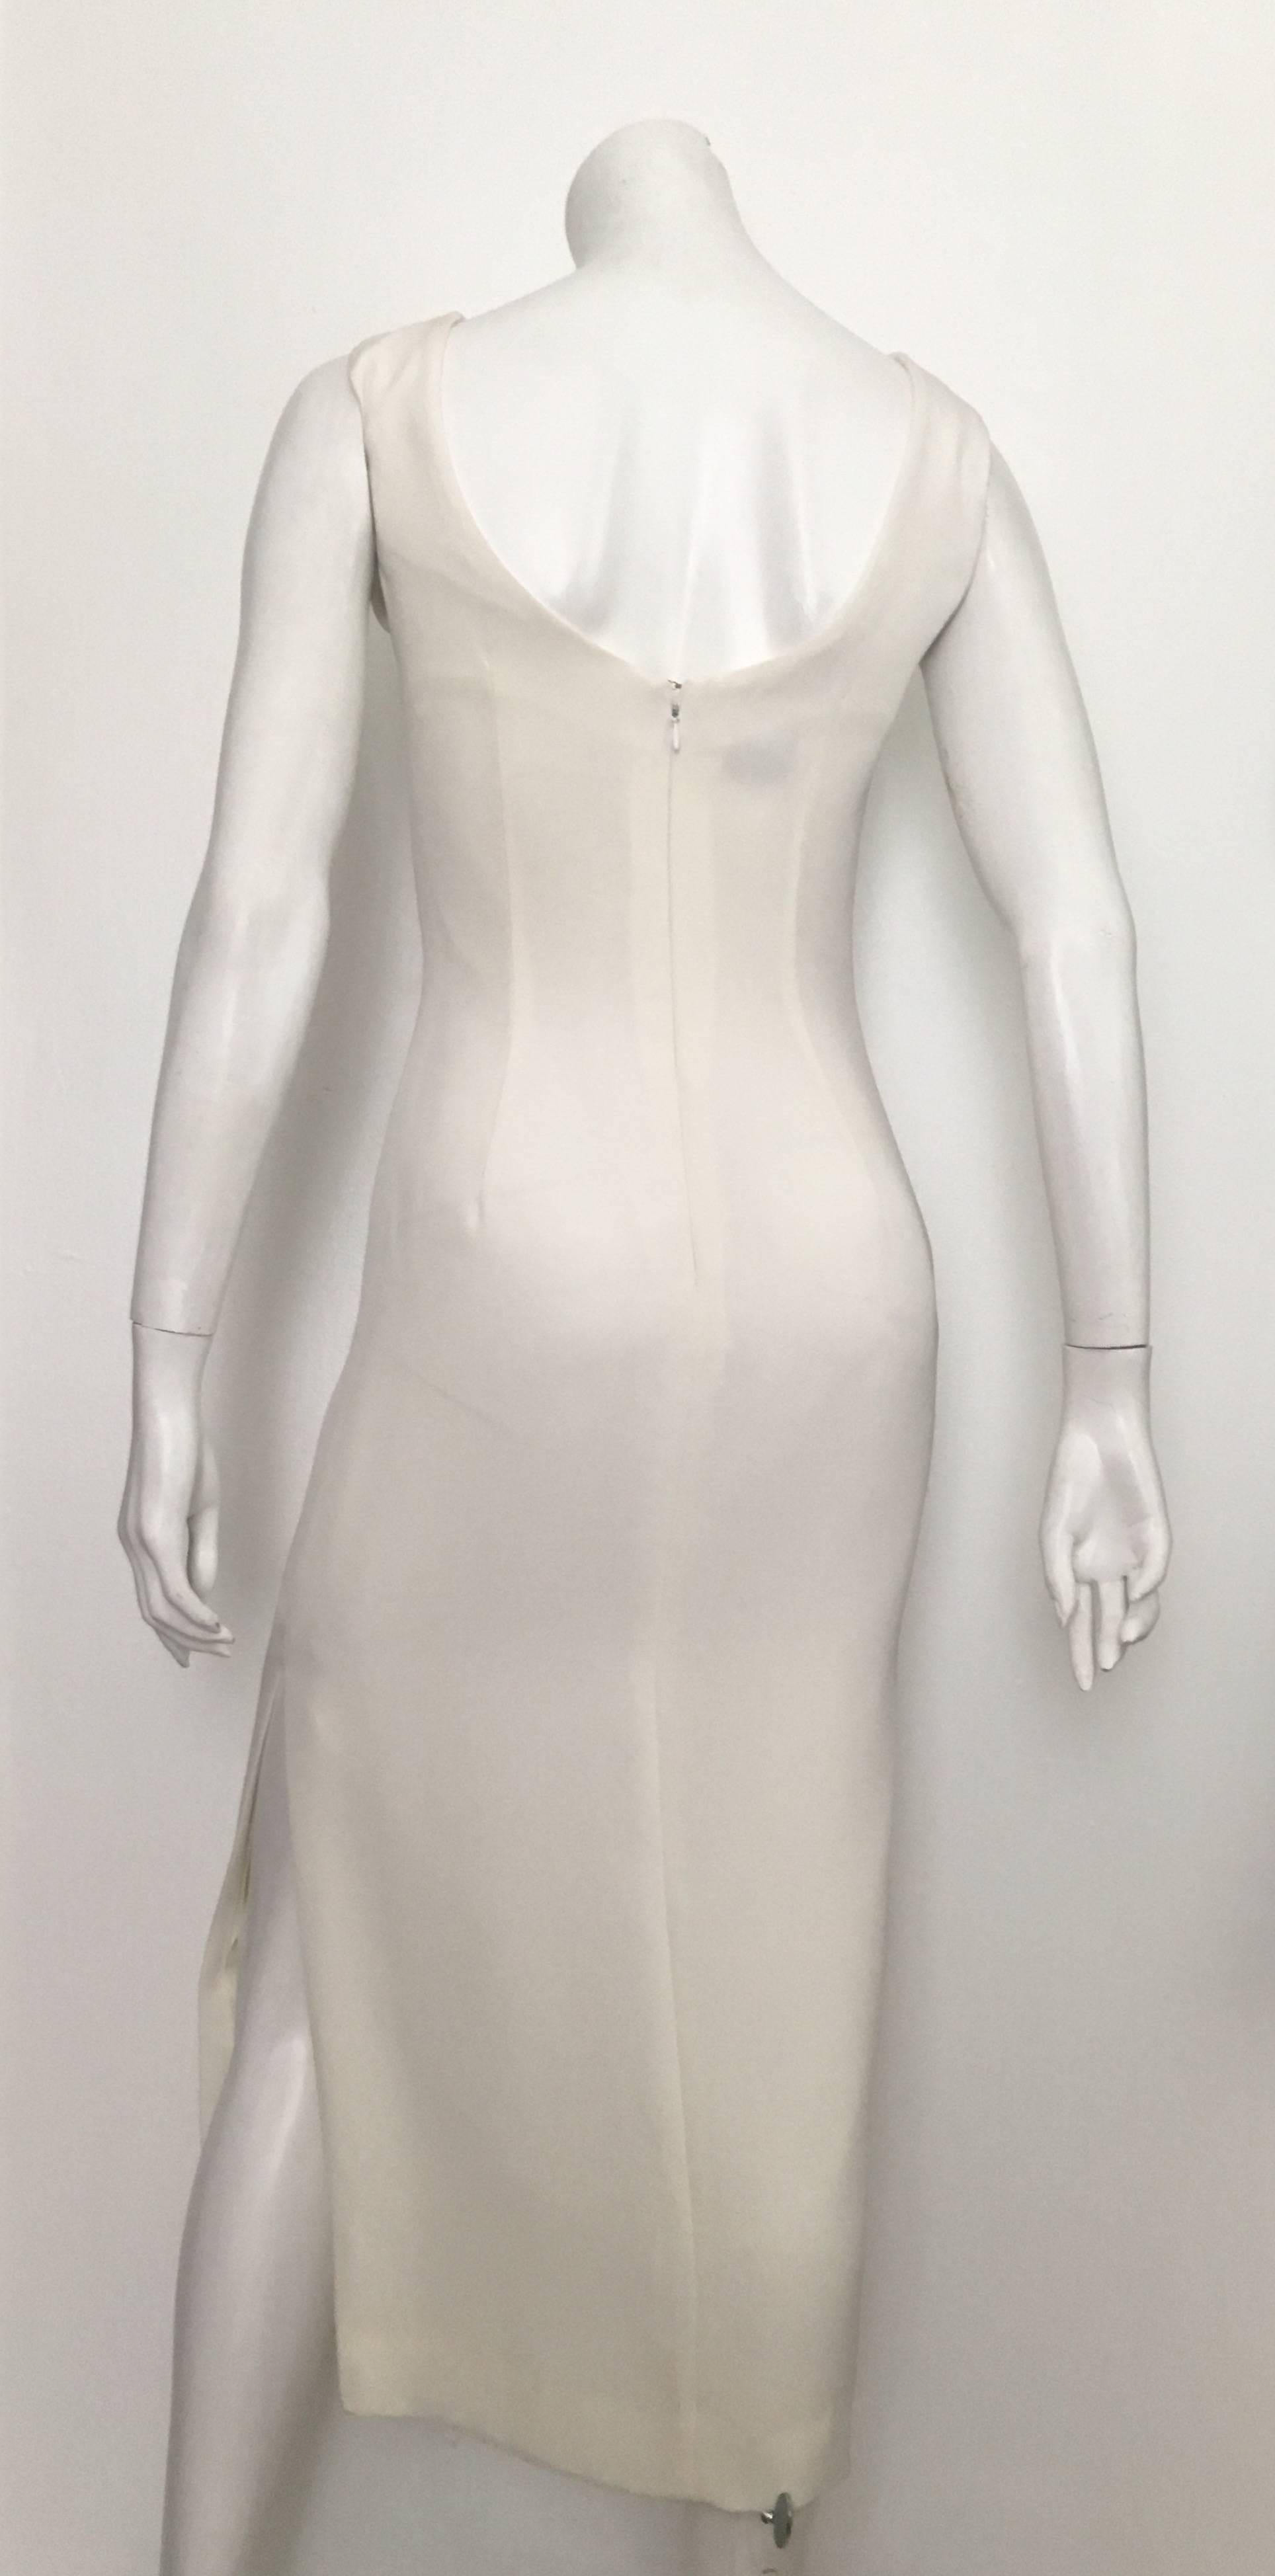 Women's Scaasi Off White Long Sheath Evening Dress Size 4.